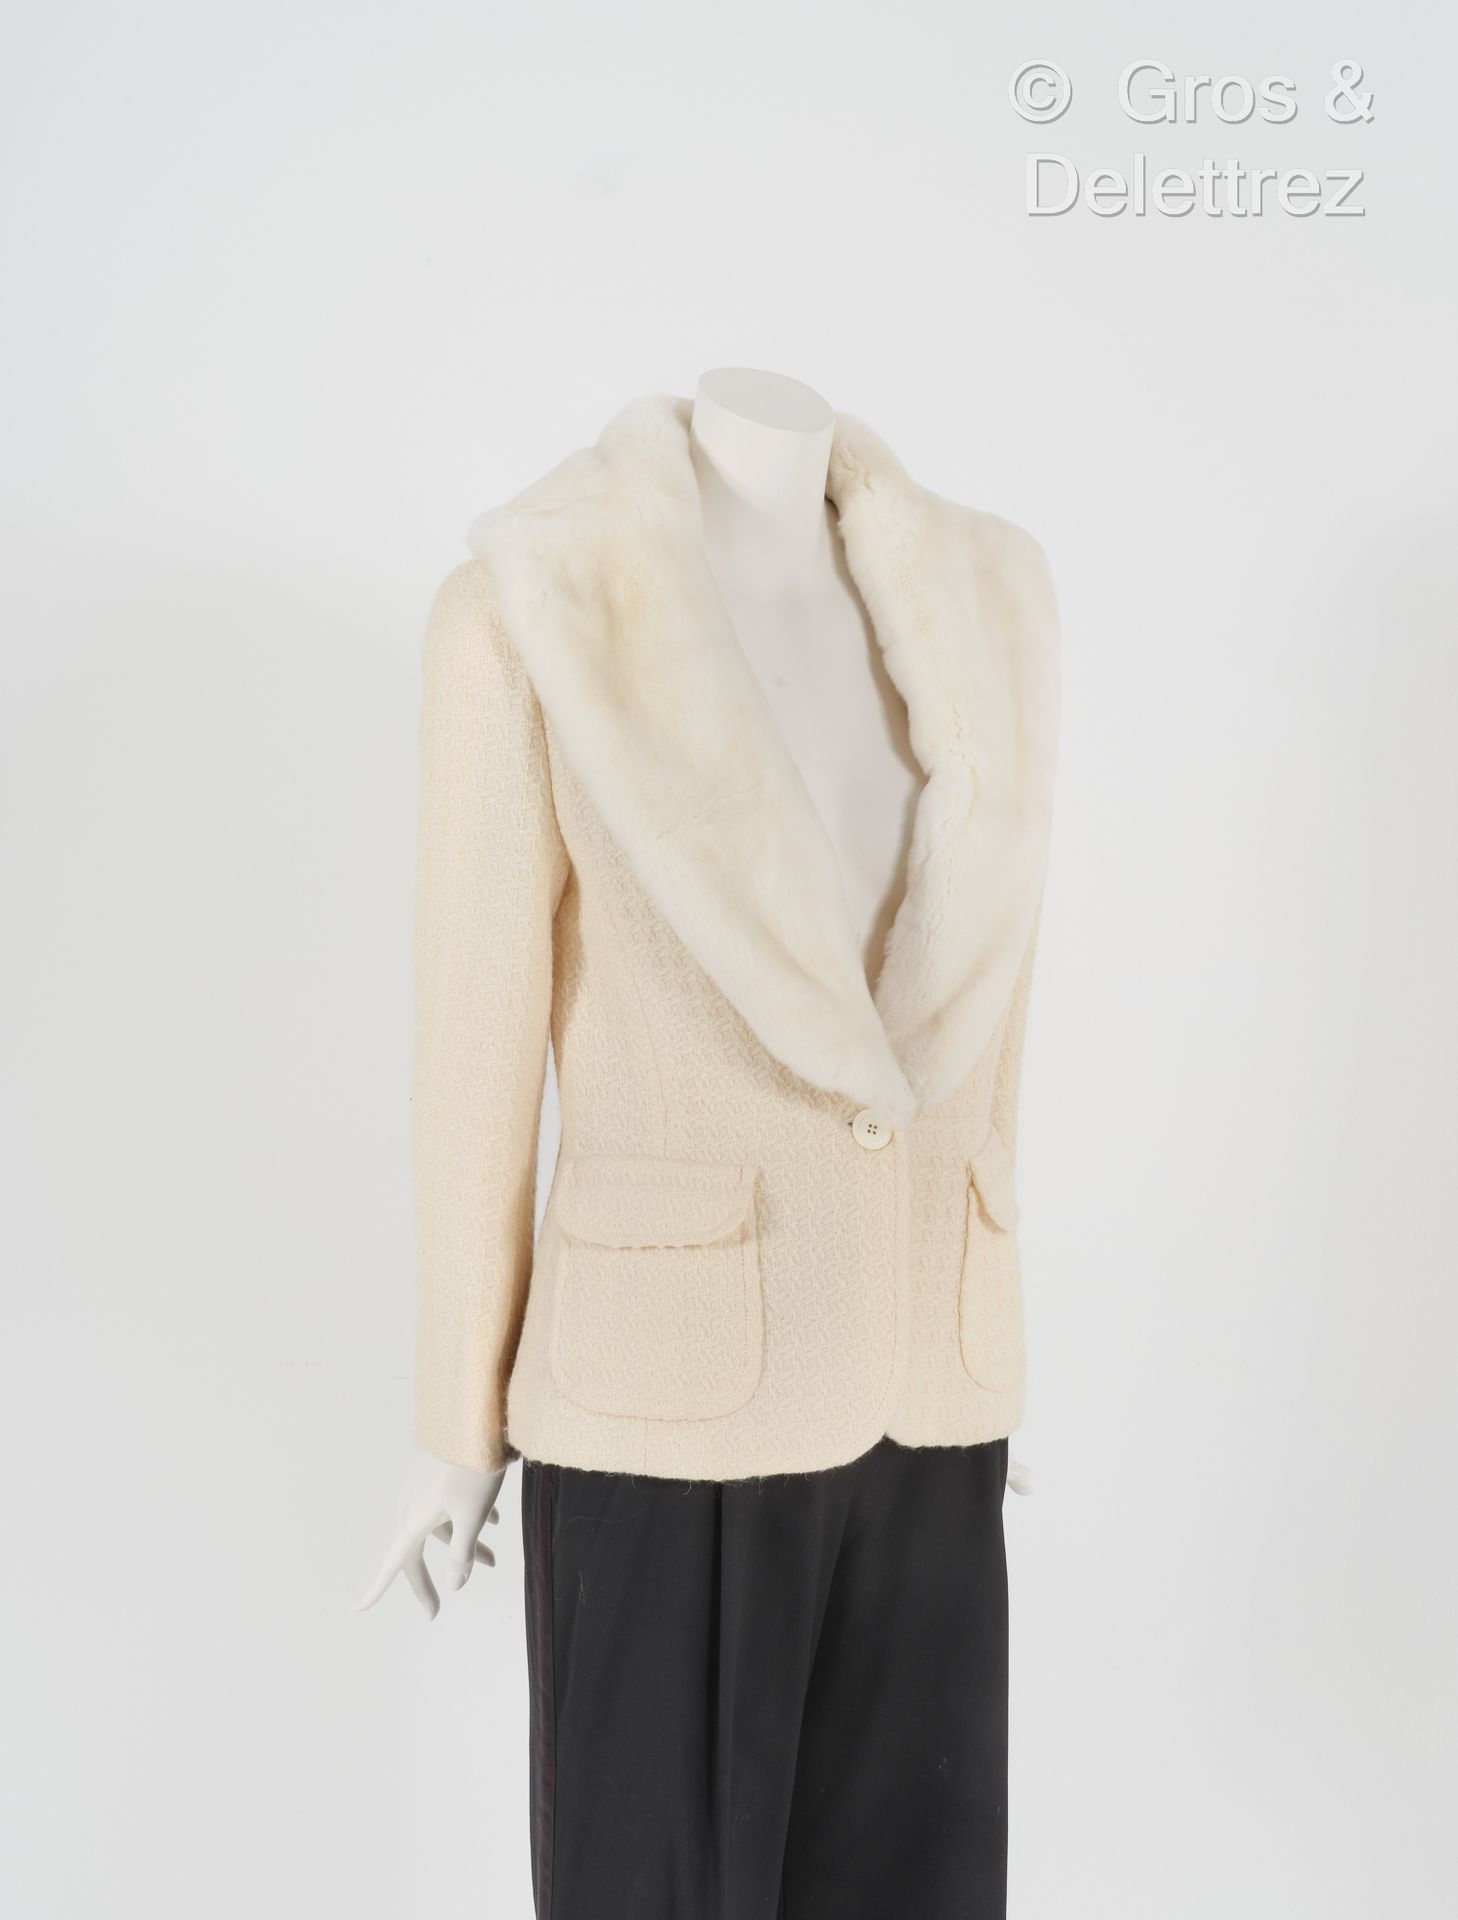 Georges RECH Giacca in lana e cachemire, ampio collo a scialle in Rex color crem&hellip;